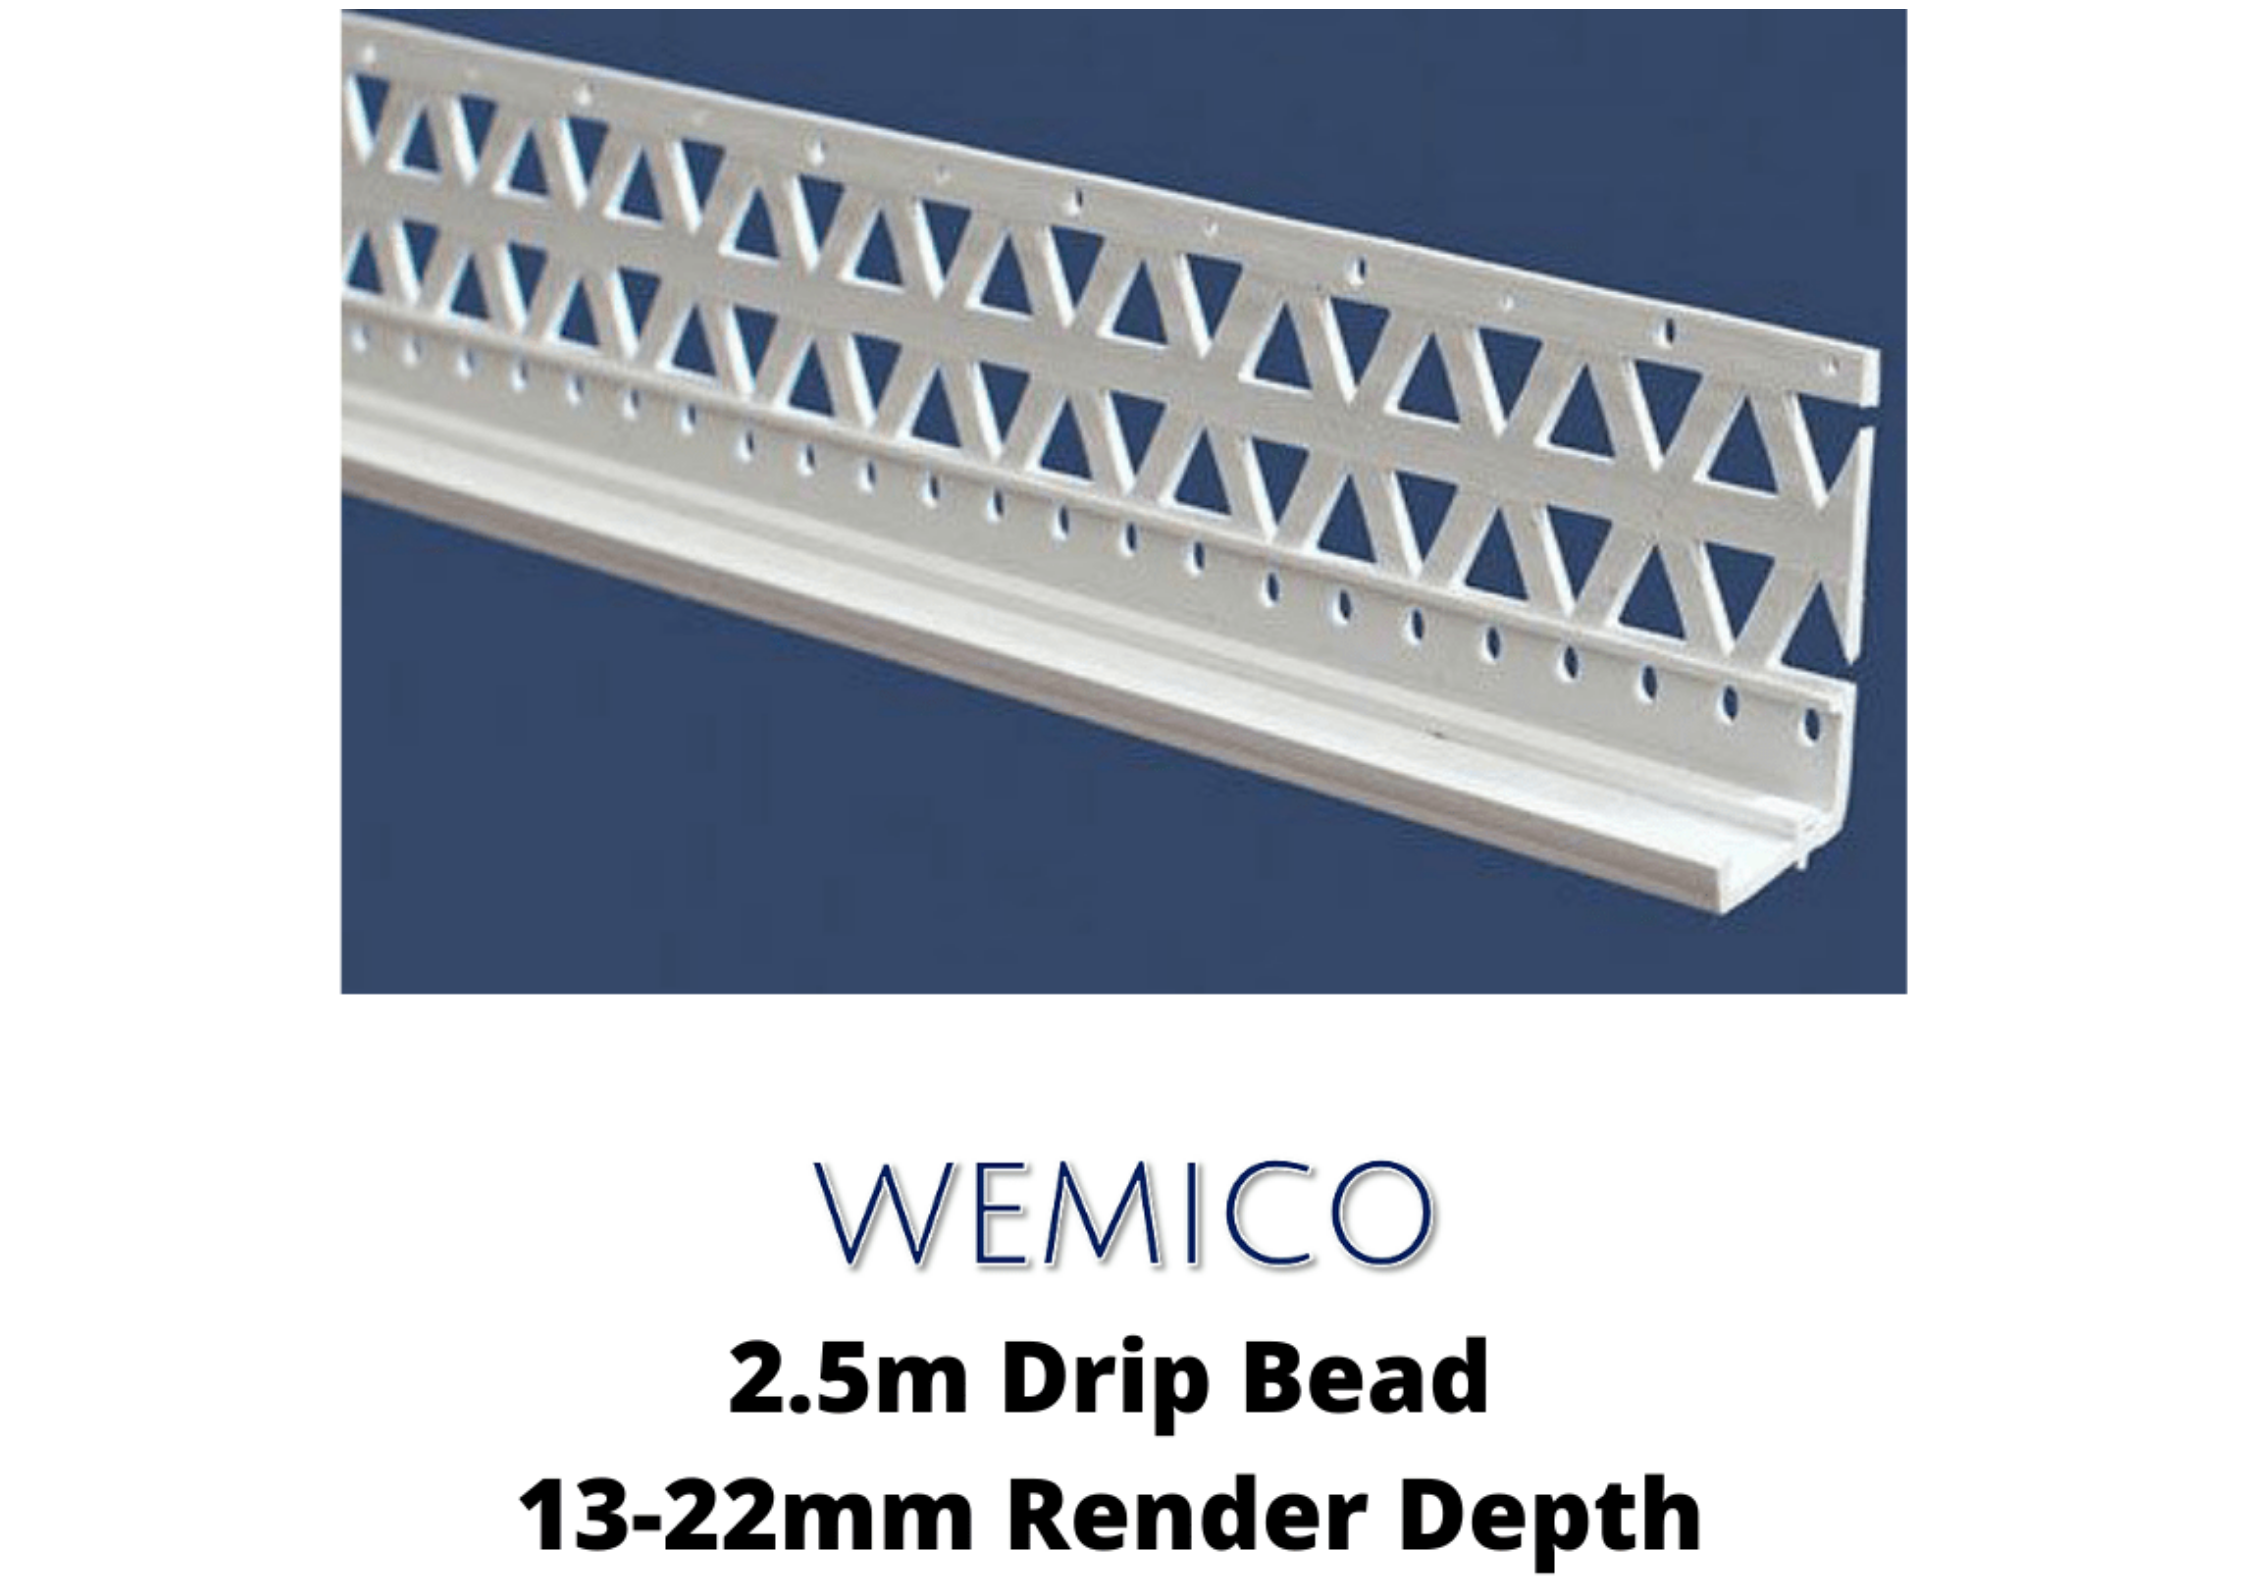 Wemico IVORY X 5 Wemico D20 PVC Drip Bead 2.5m